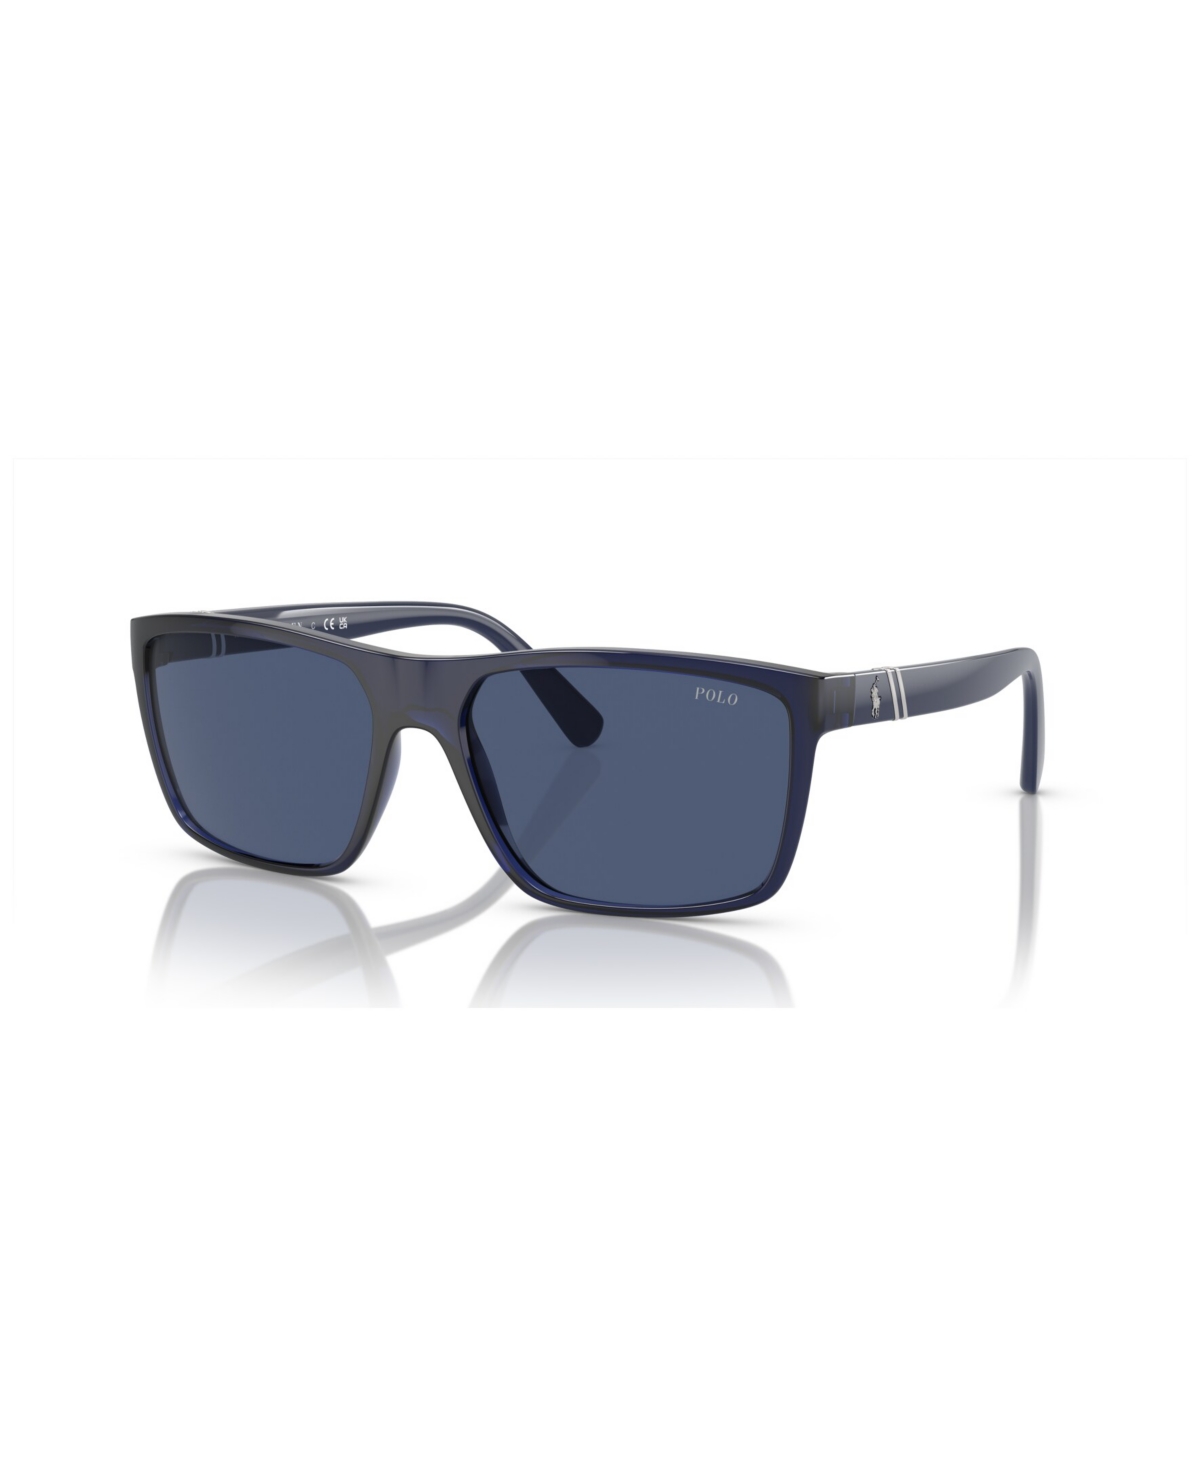 Polo Ralph Lauren Men's Sunglasses Ph4133 In Shiny Transparent Navy Blue